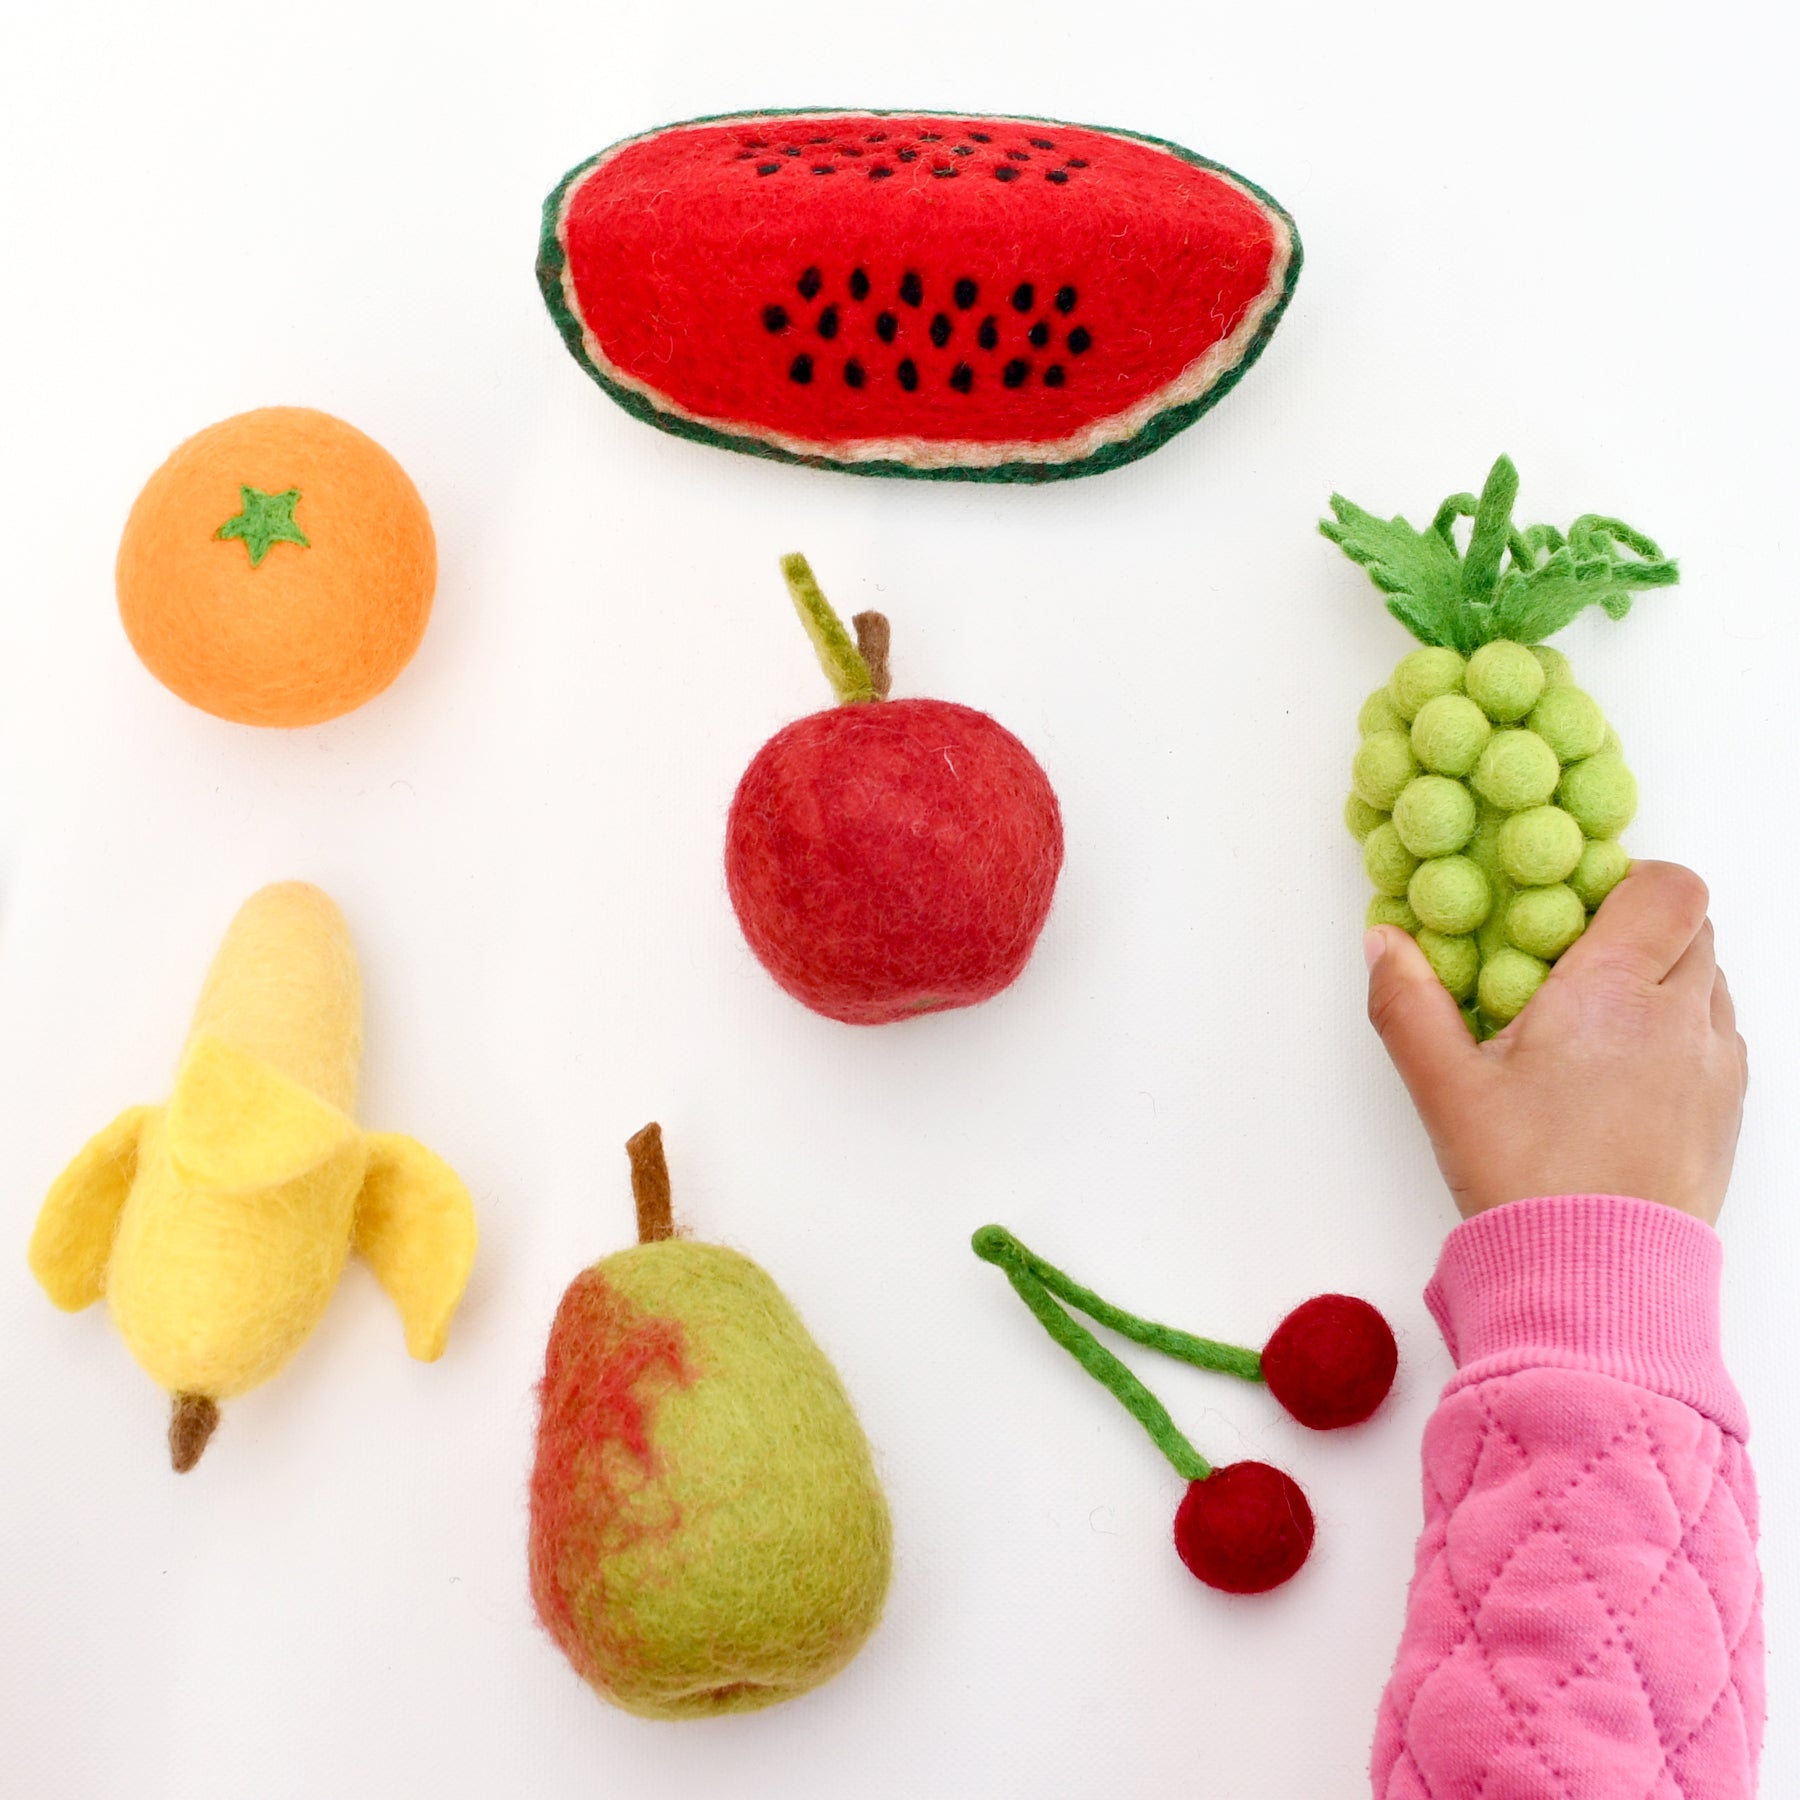 Felt Food Groups Play Food - Fruits